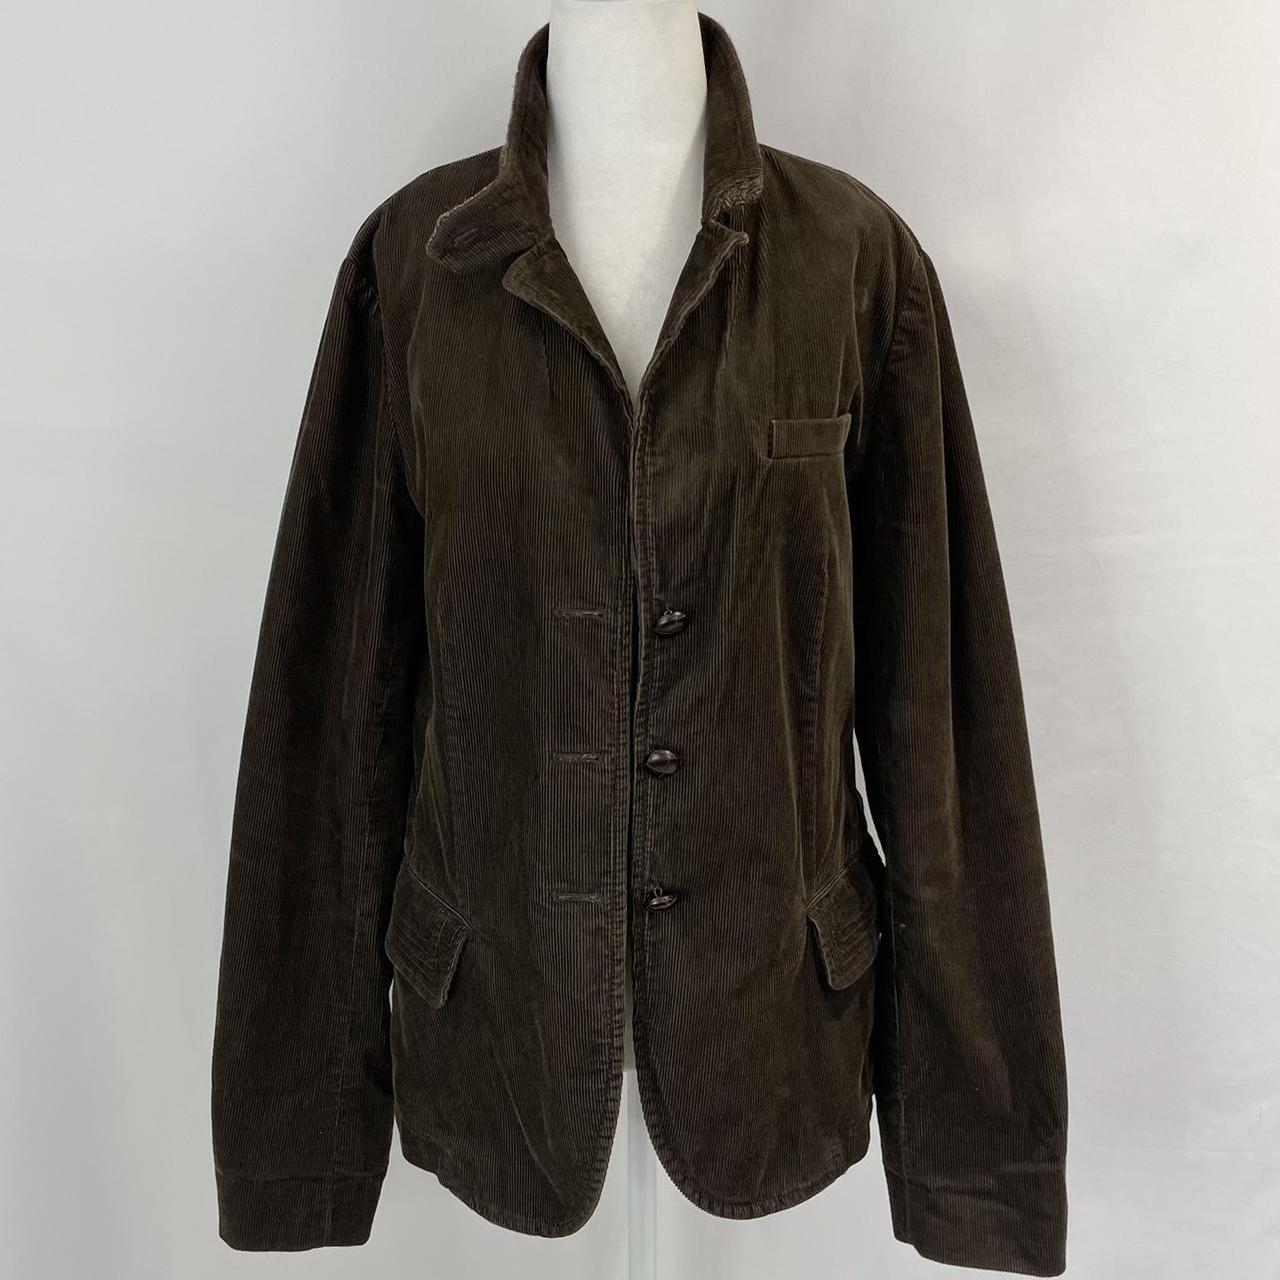 J Crew Brown Corduroy Academy Jacket Leather Button... - Depop